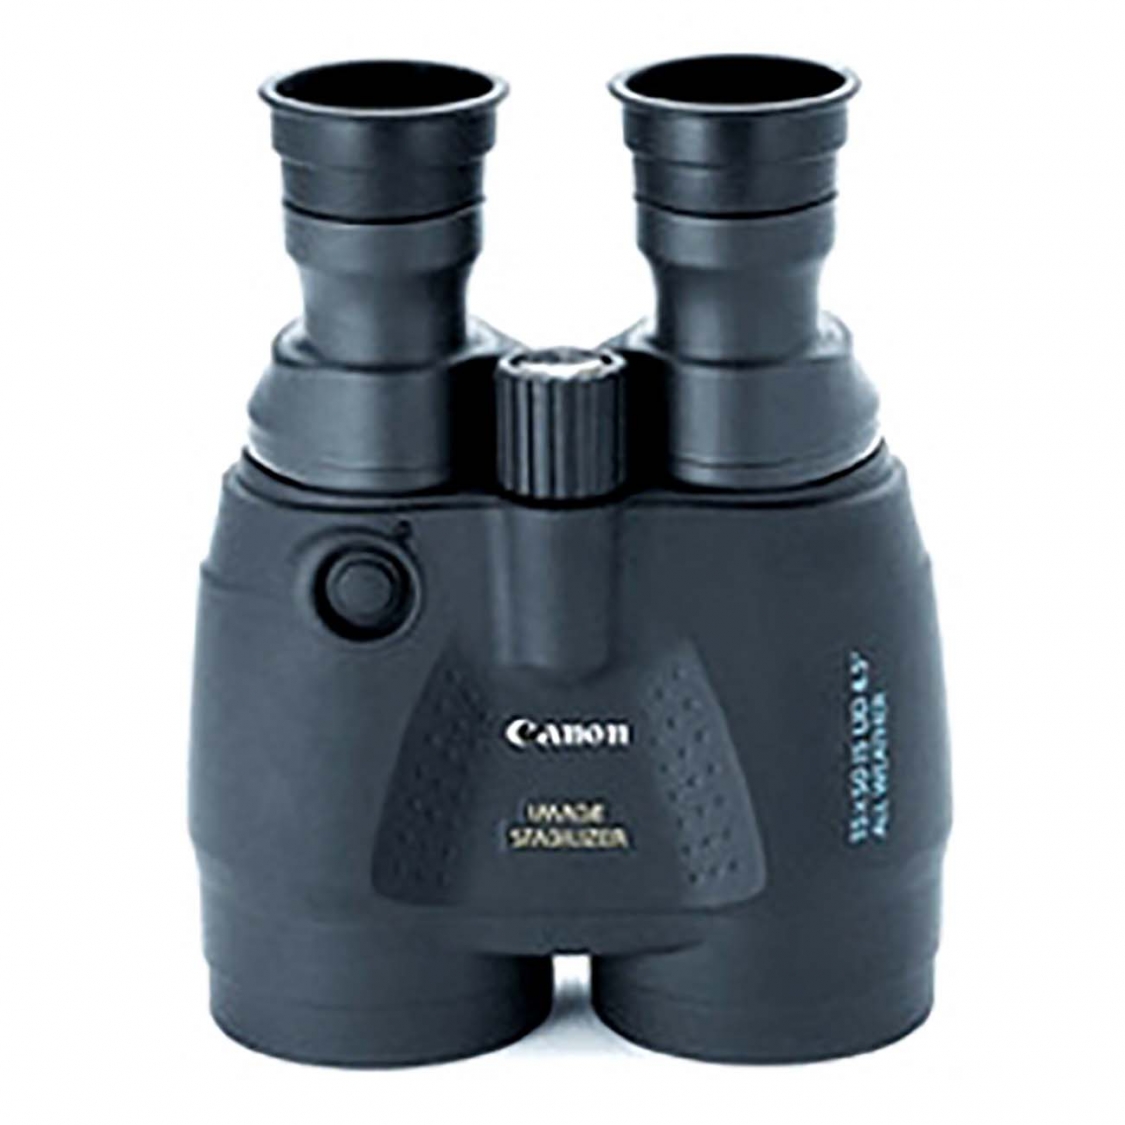 Canon 15x50 IS (Image Stabilizer) Binoculars